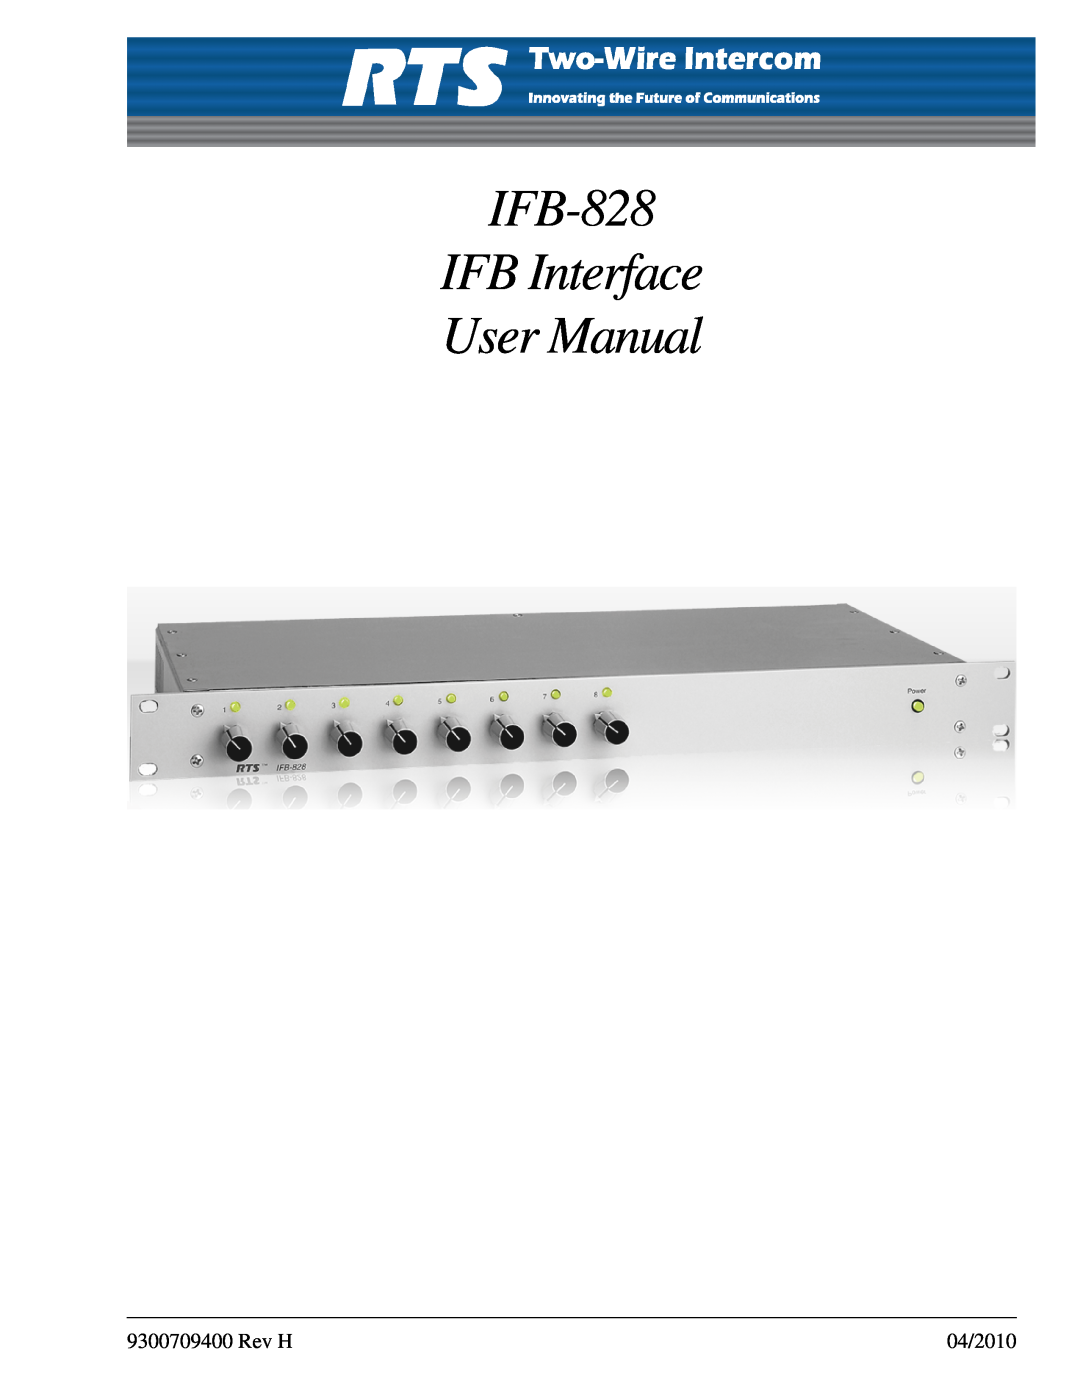 RTS IFB-828 user manual Rev H, 04/2010 